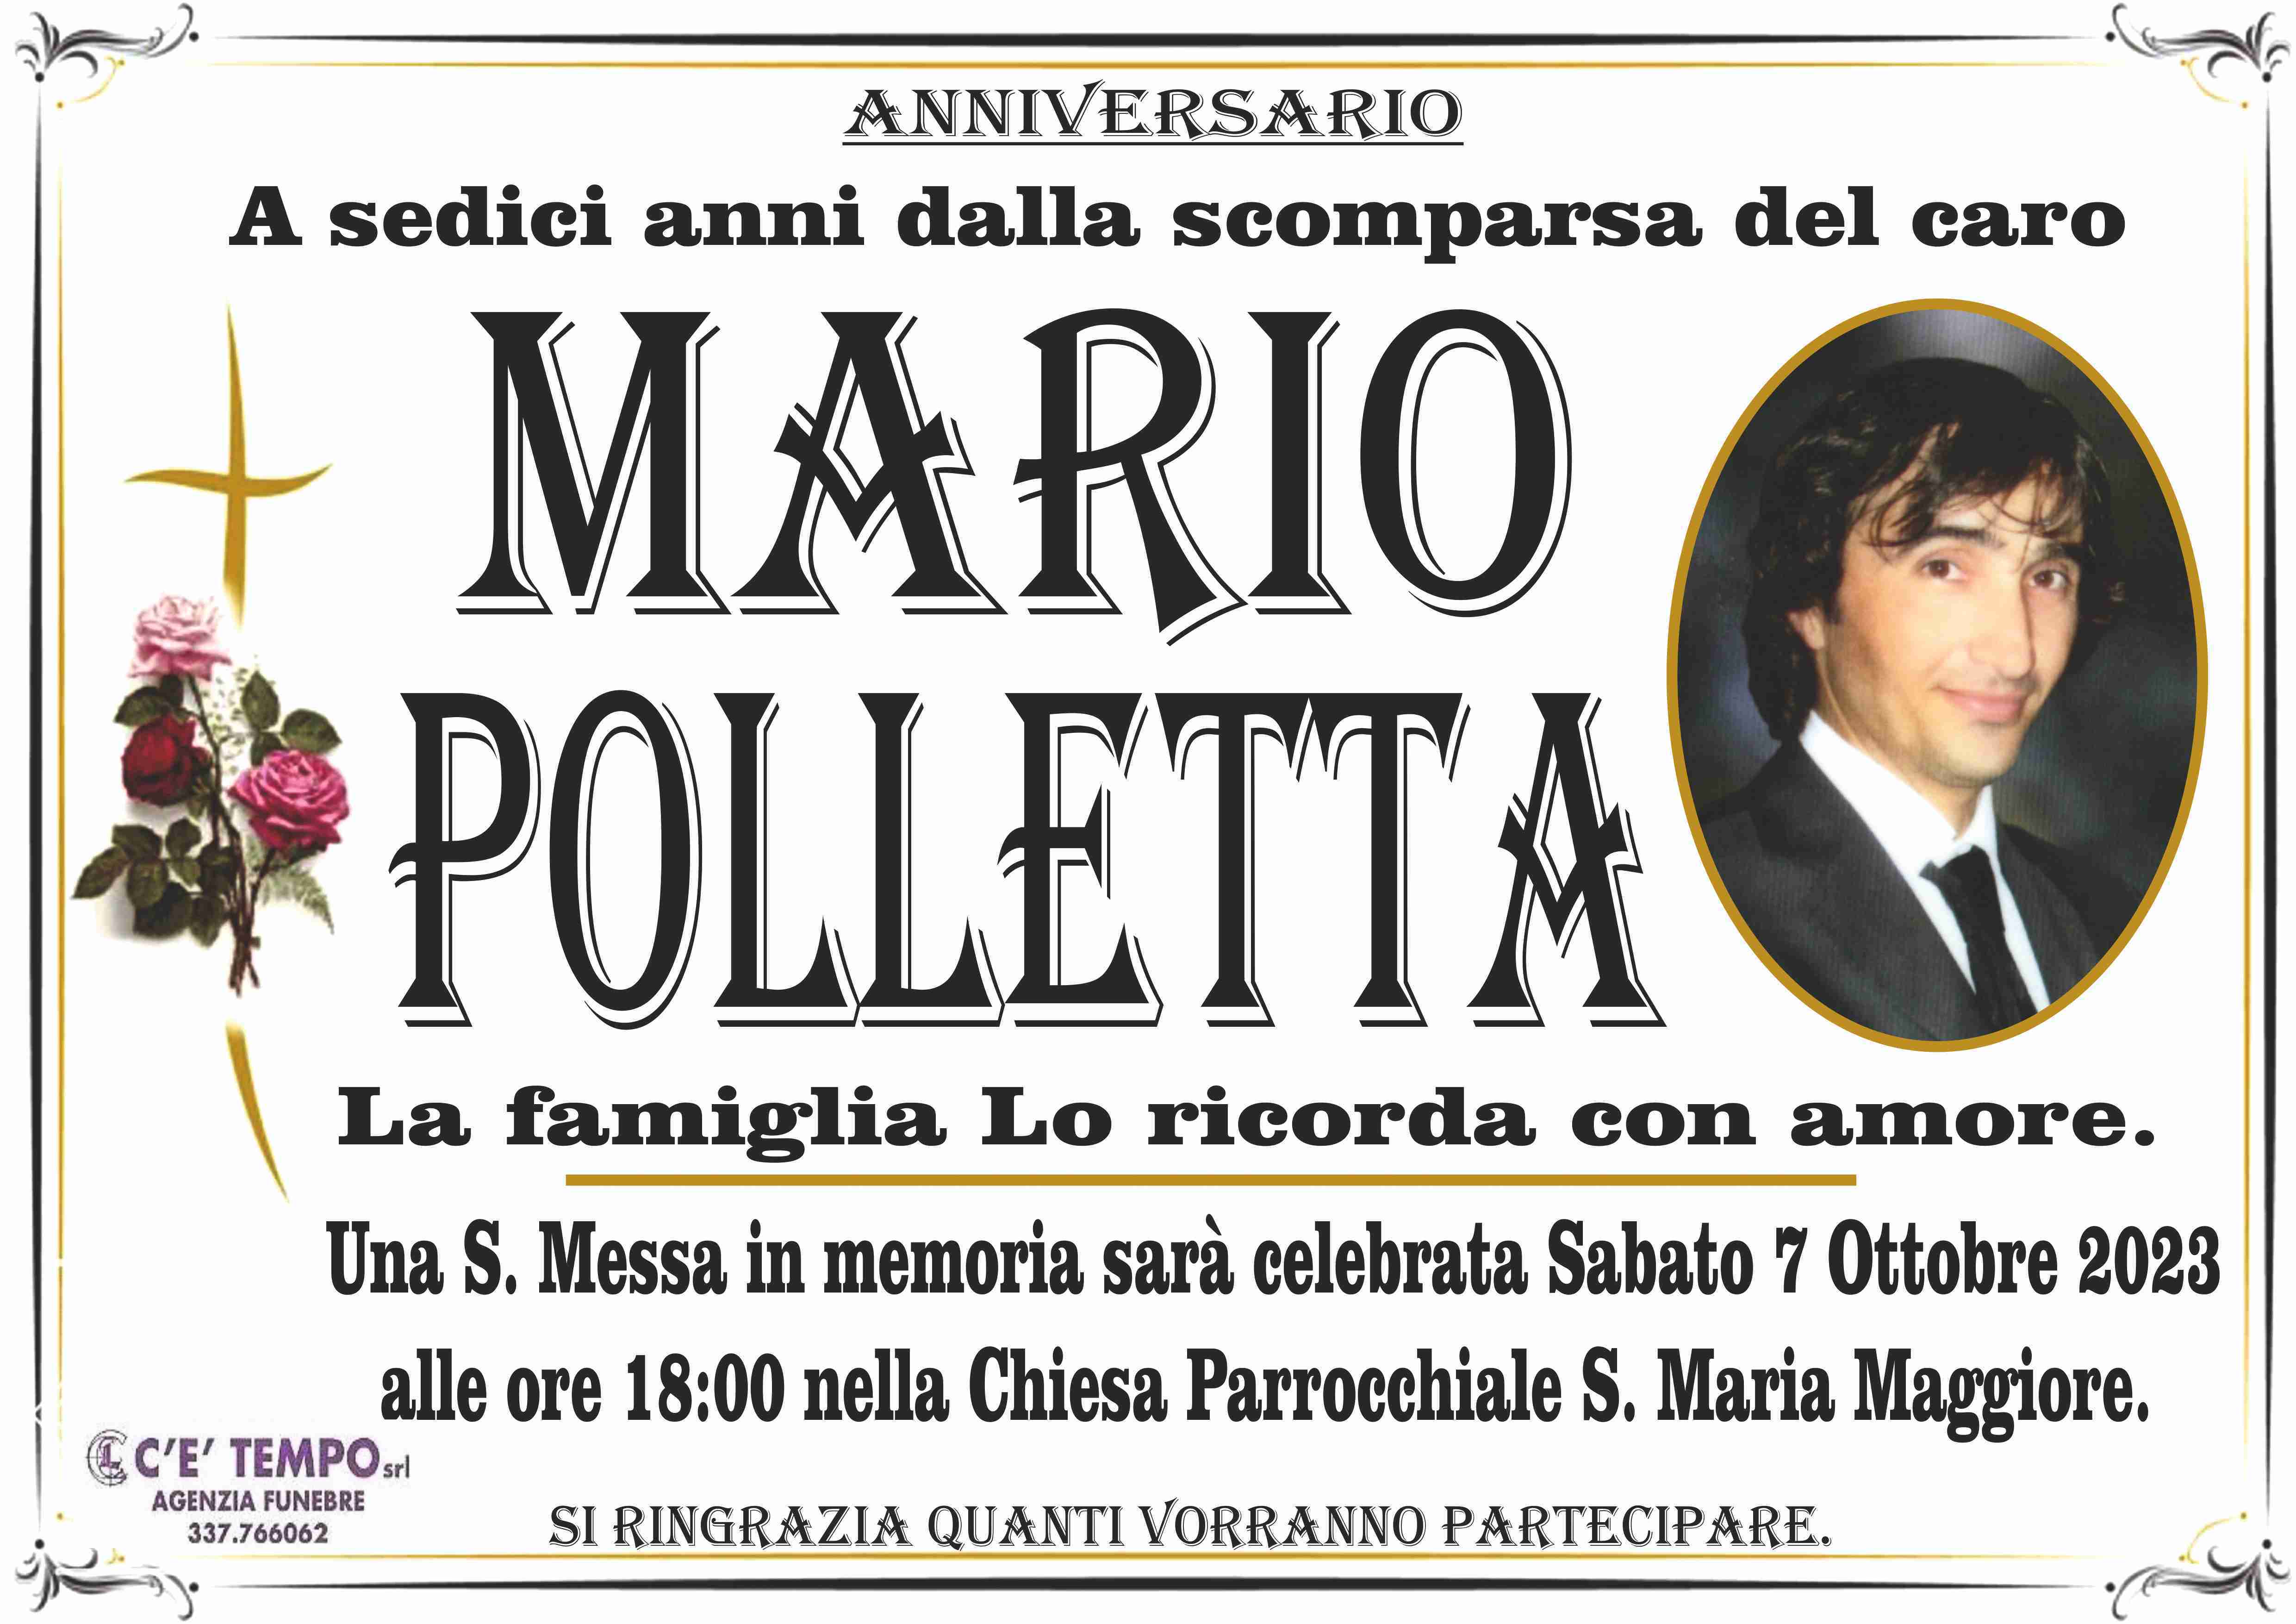 Mario Polletta